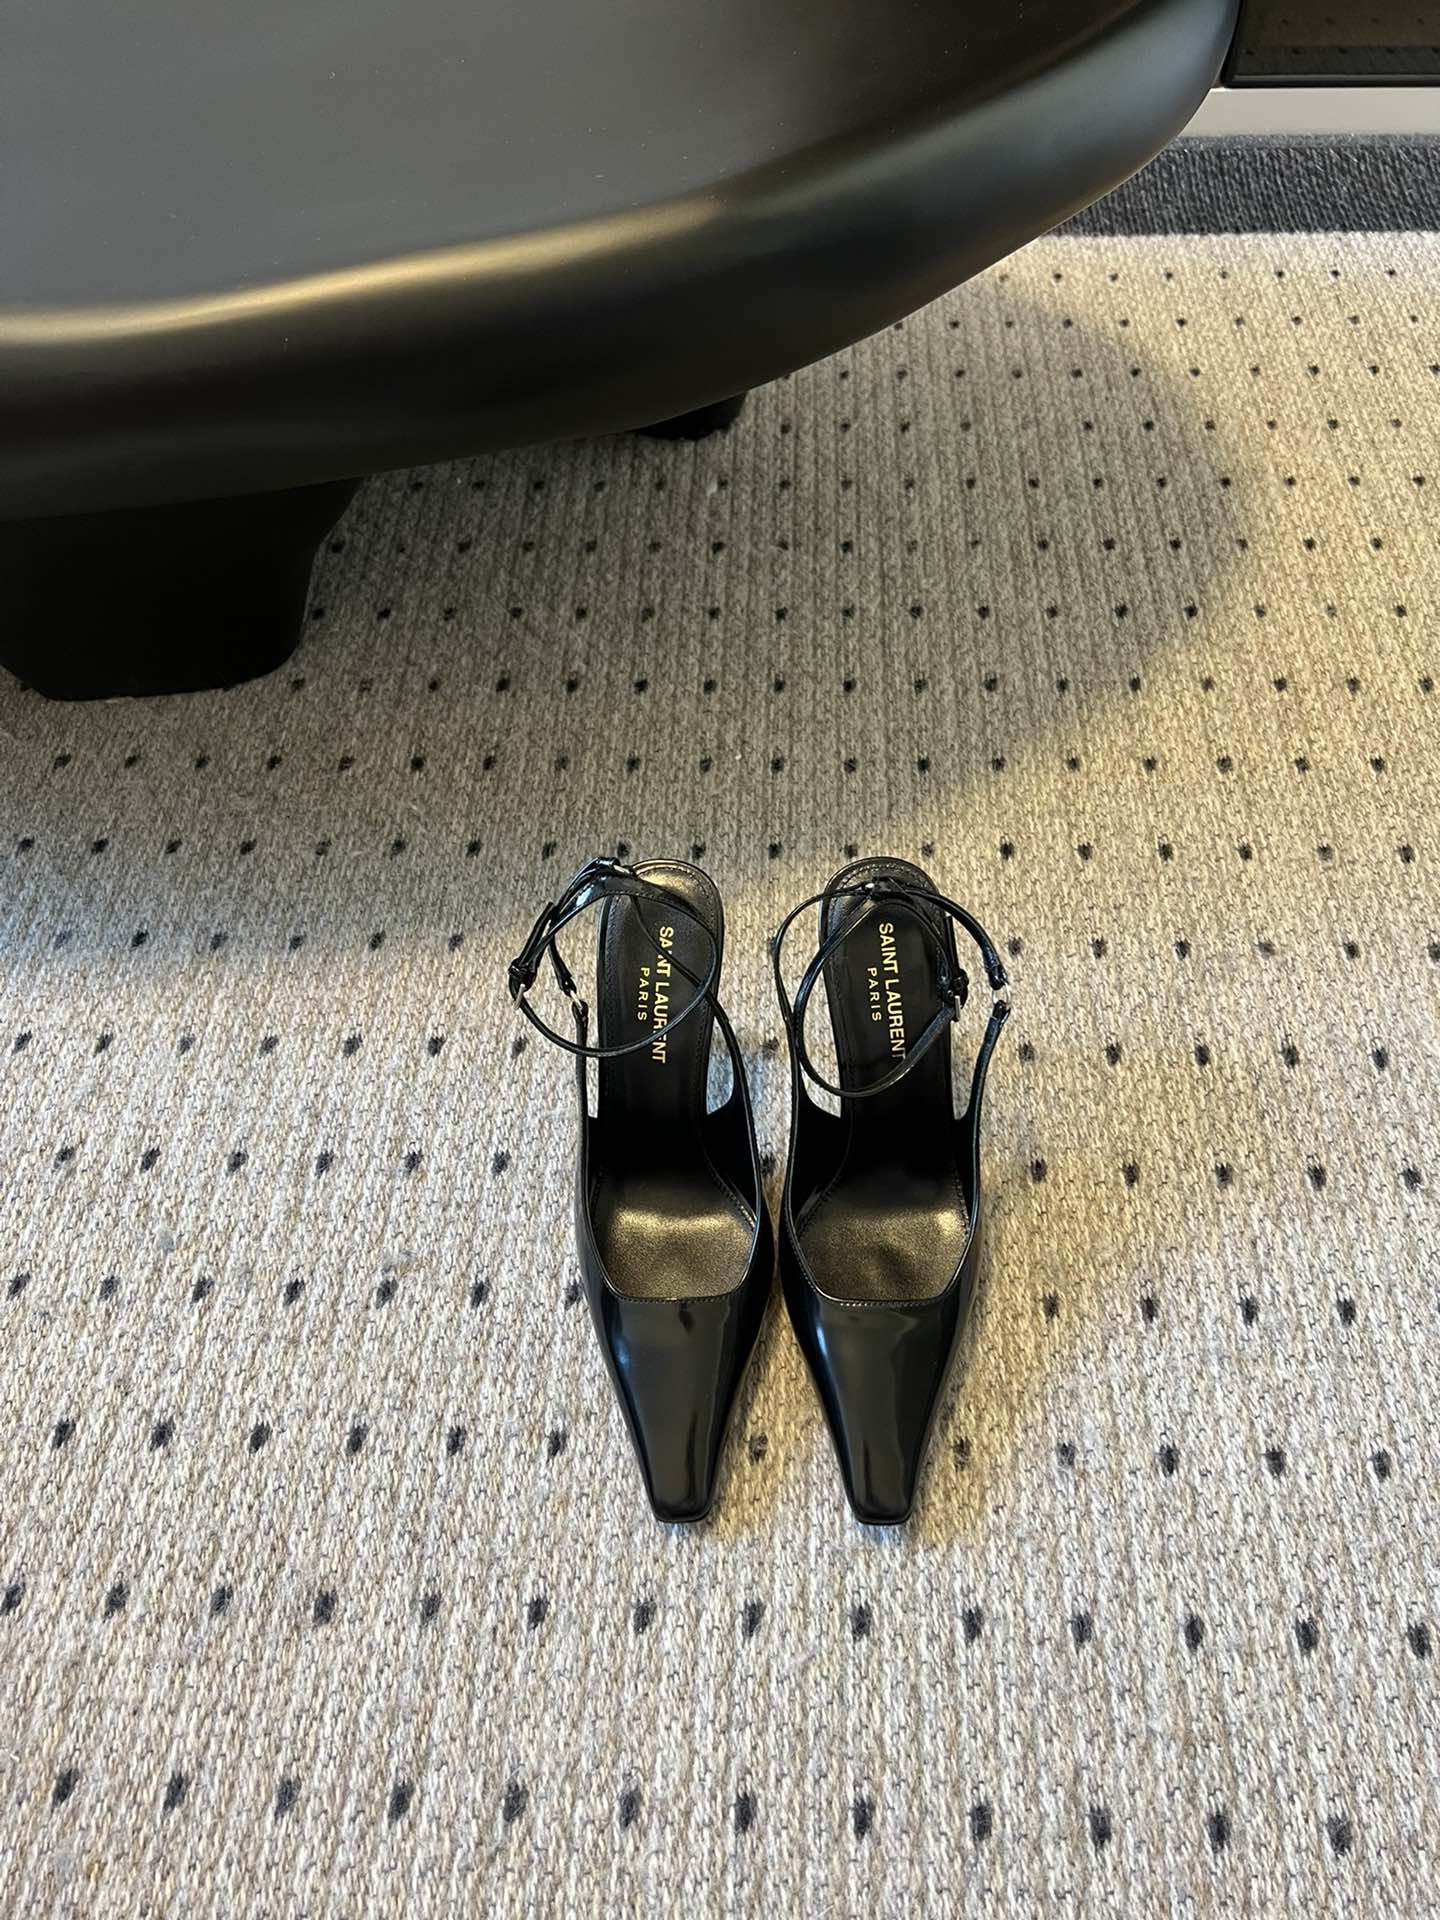 Yves Saint Laurent Shoes High Heel Pumps Genuine Leather Patent